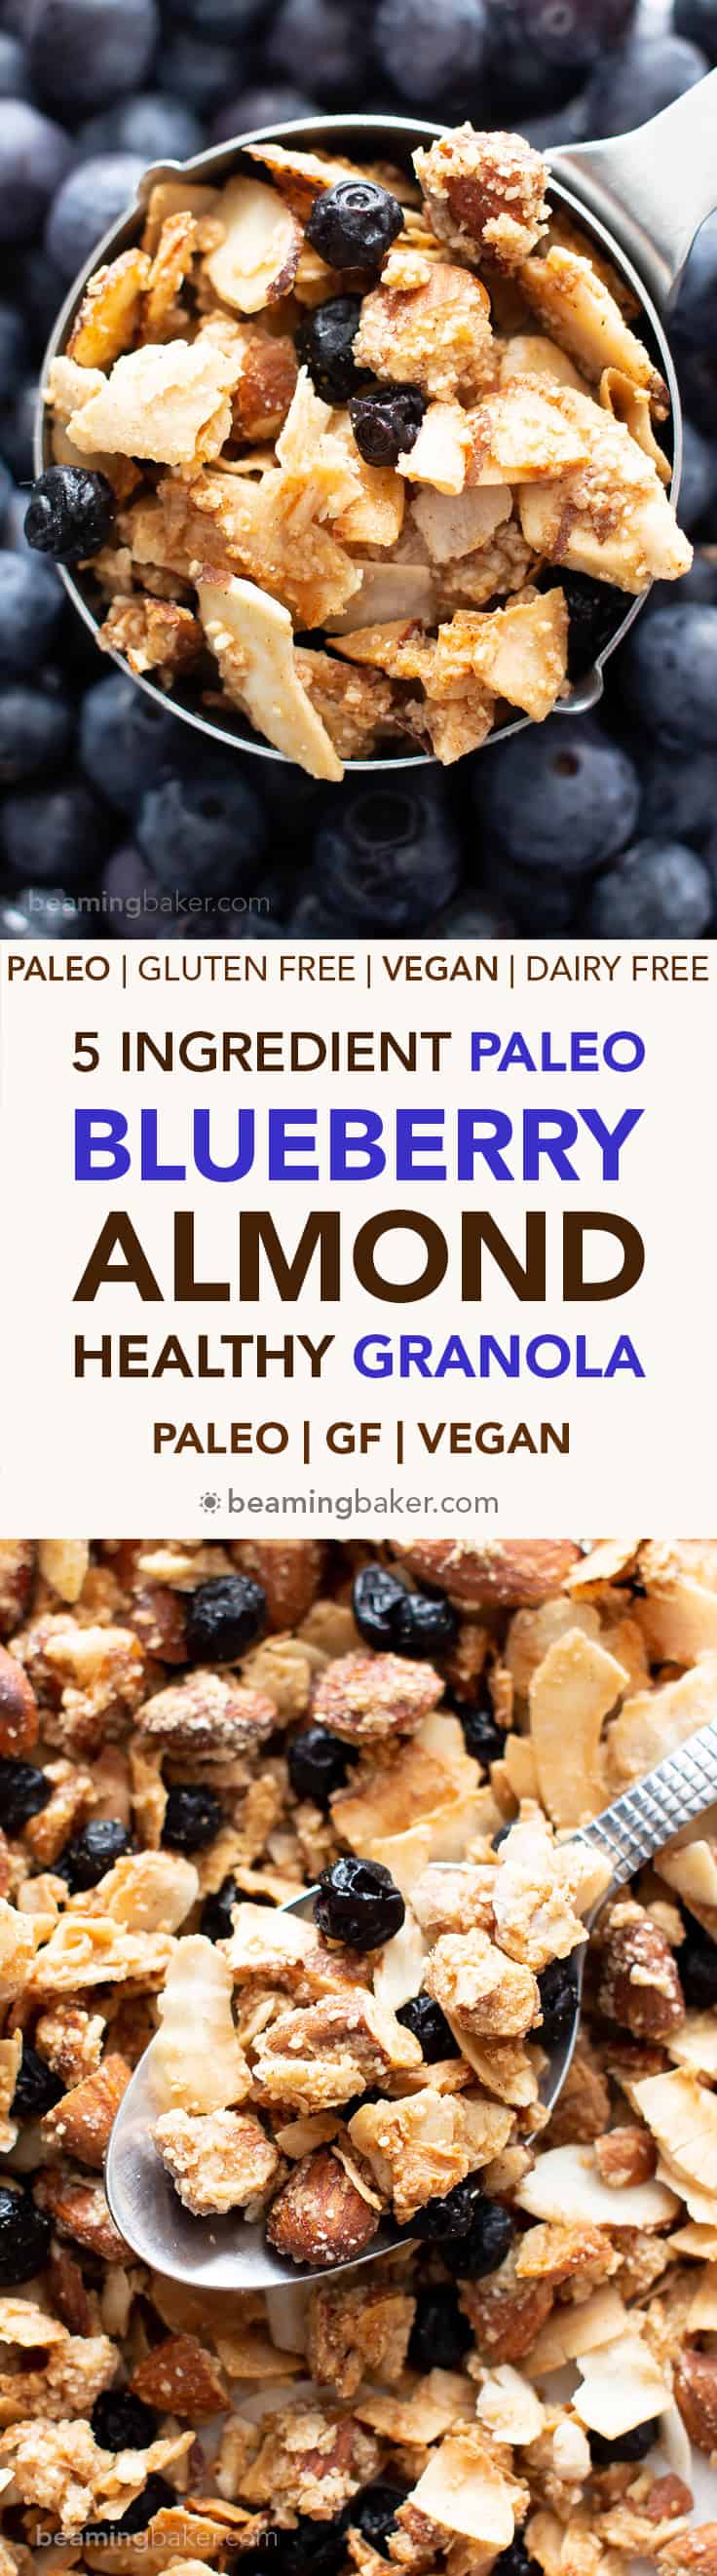 Paleo Vegan Granola (V, GF): a 5 ingredient recipe for sunny blueberry almond granola—crispy, crunchy clusters bursting with almonds & blueberries. The best healthy vegan breakfast recipe! #Vegan #Paleo #Granola #GlutenFree | Recipe at BeamingBaker.com